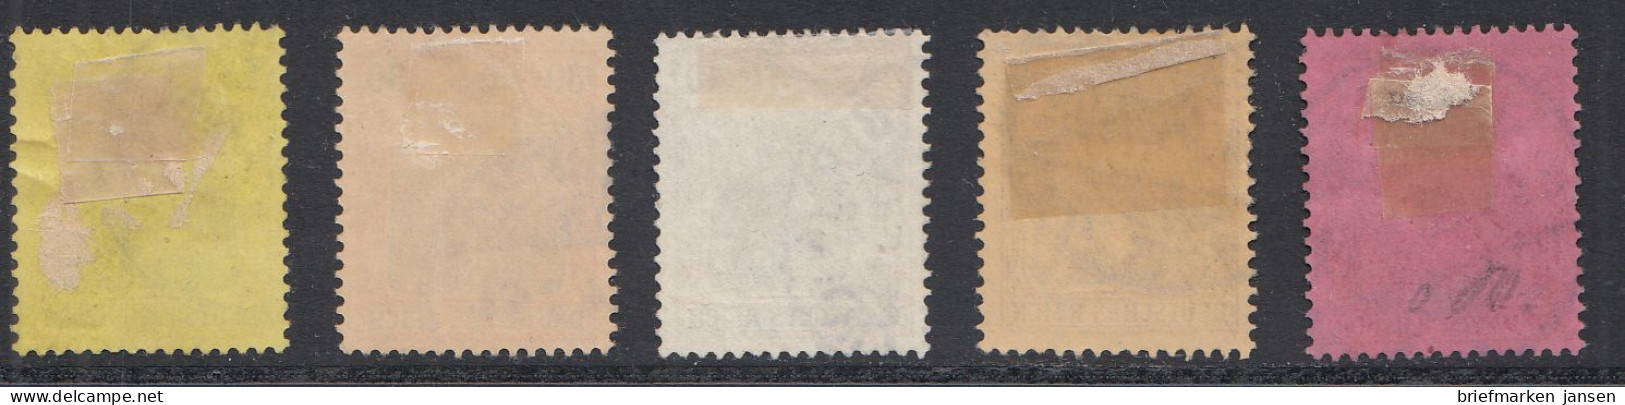 D,Dt.Reich Mi.Nr. 68-77, Freim. Germania, Gestempelt - Unused Stamps